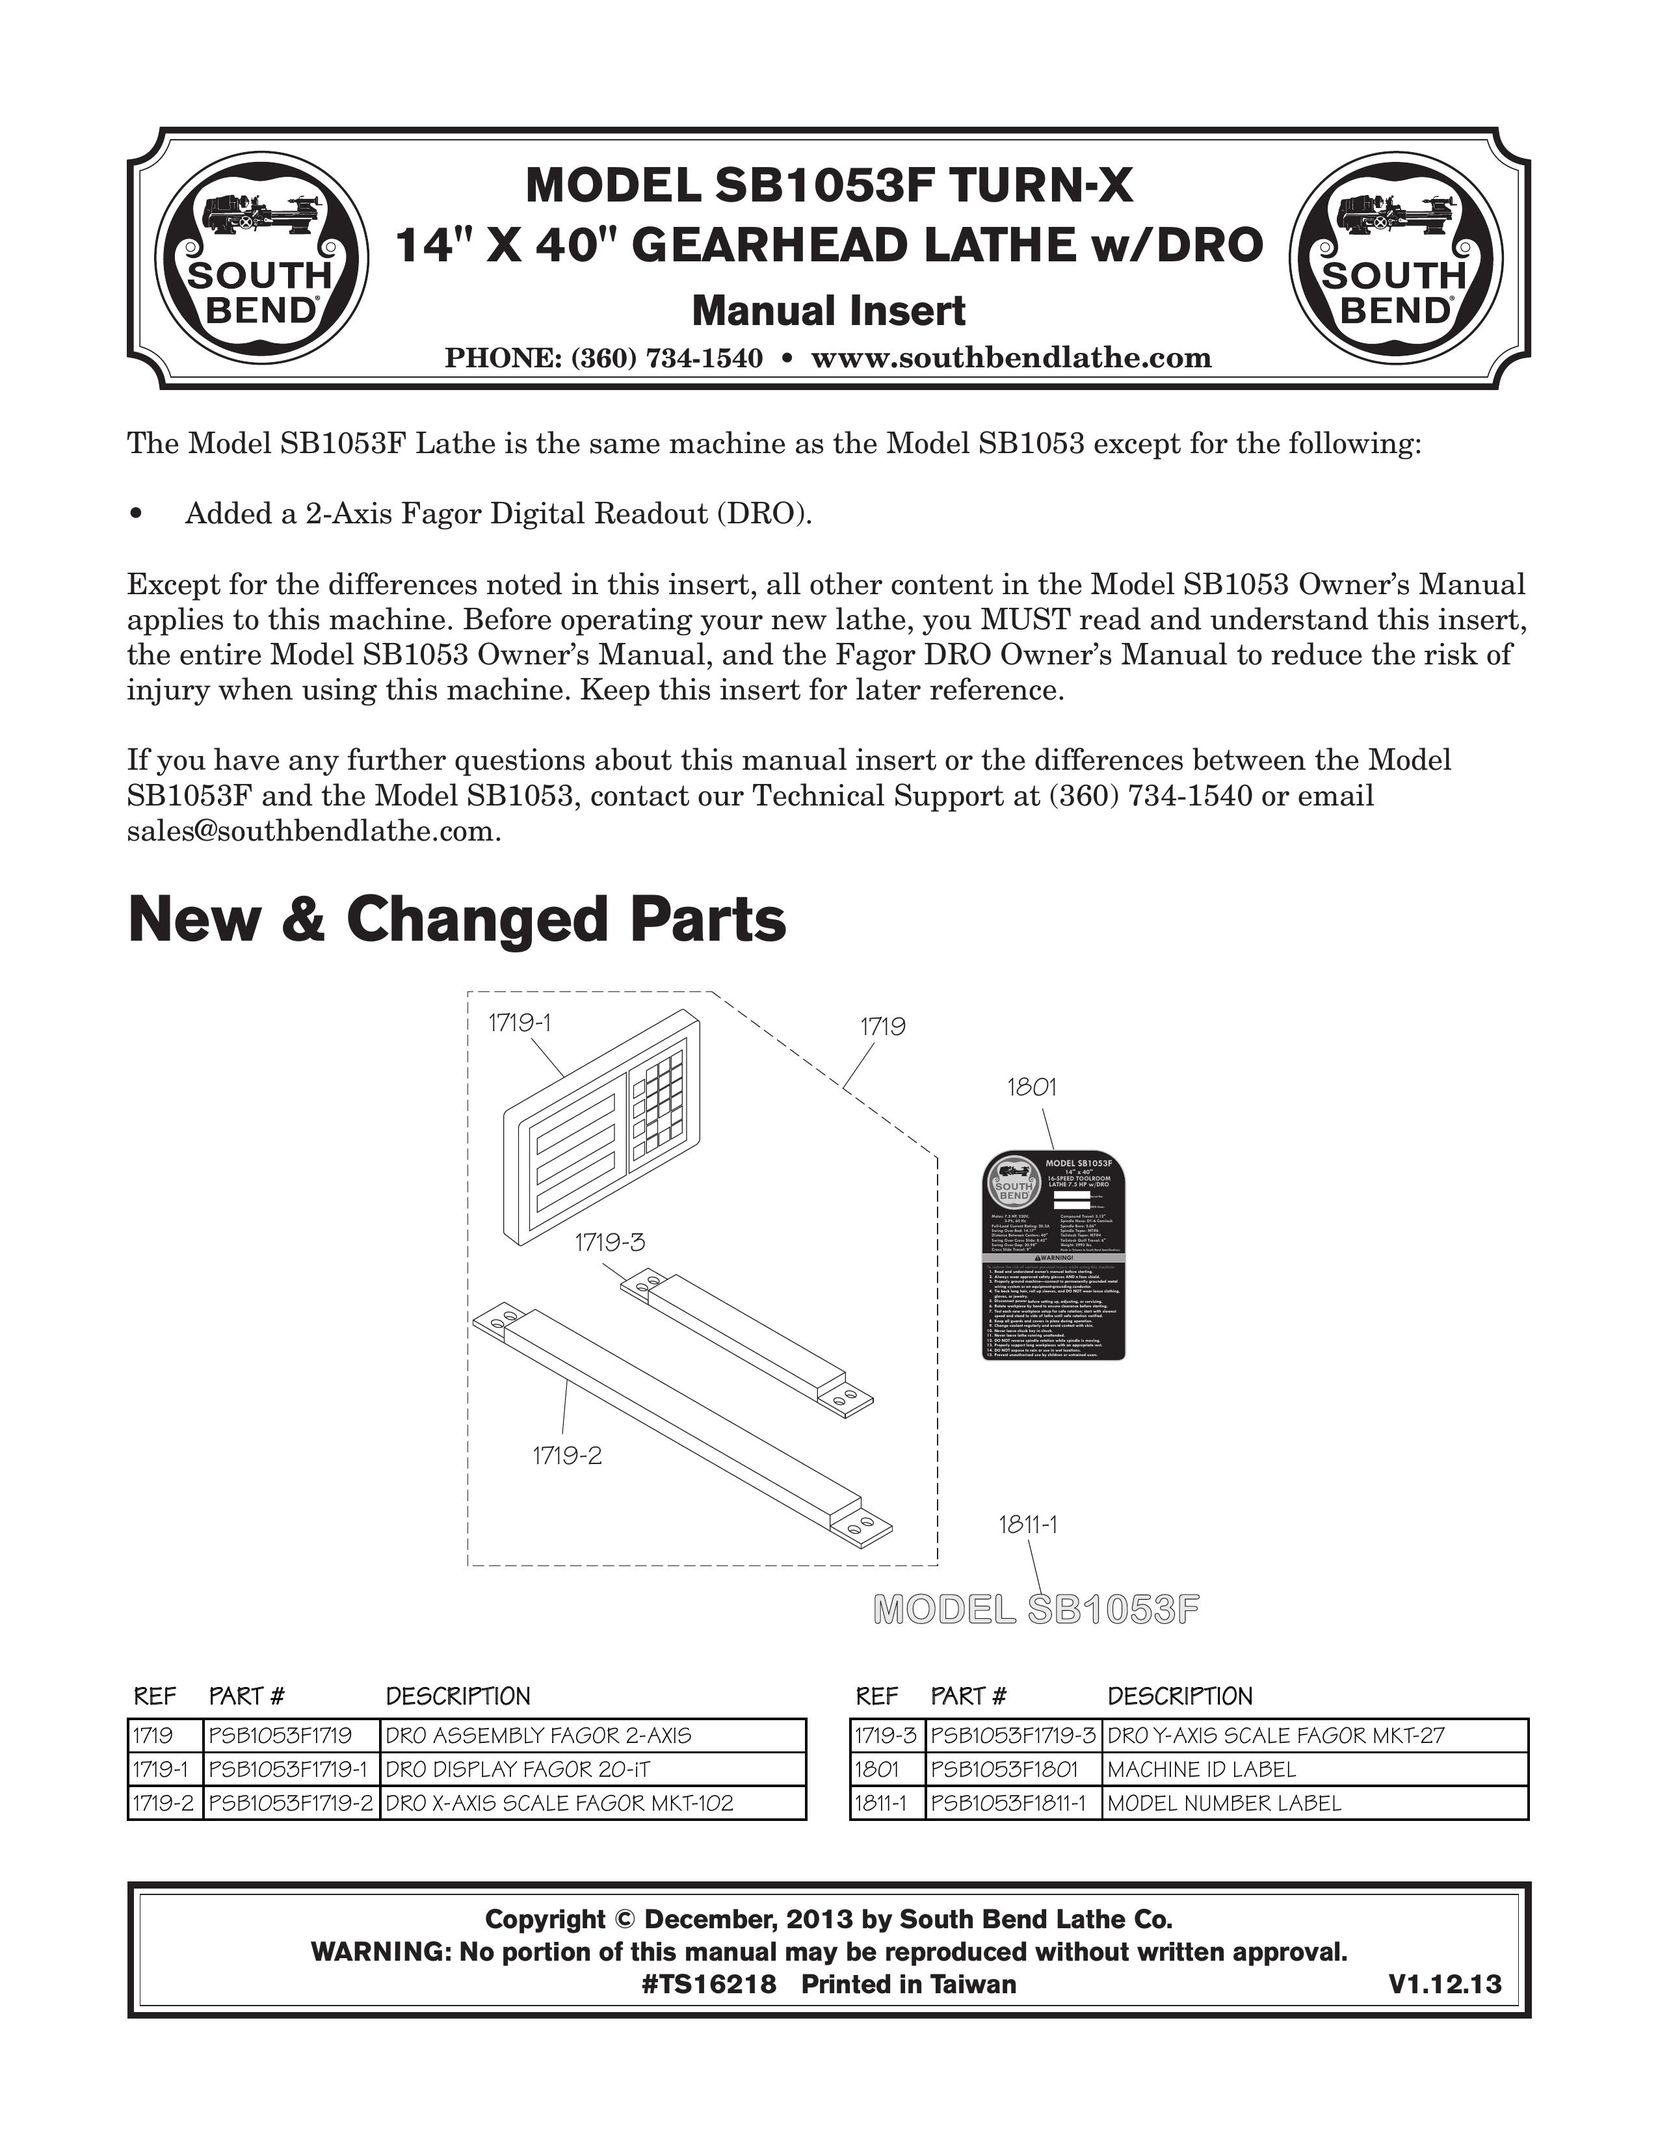 Southbend SB1053F Turn-X Lathe User Manual